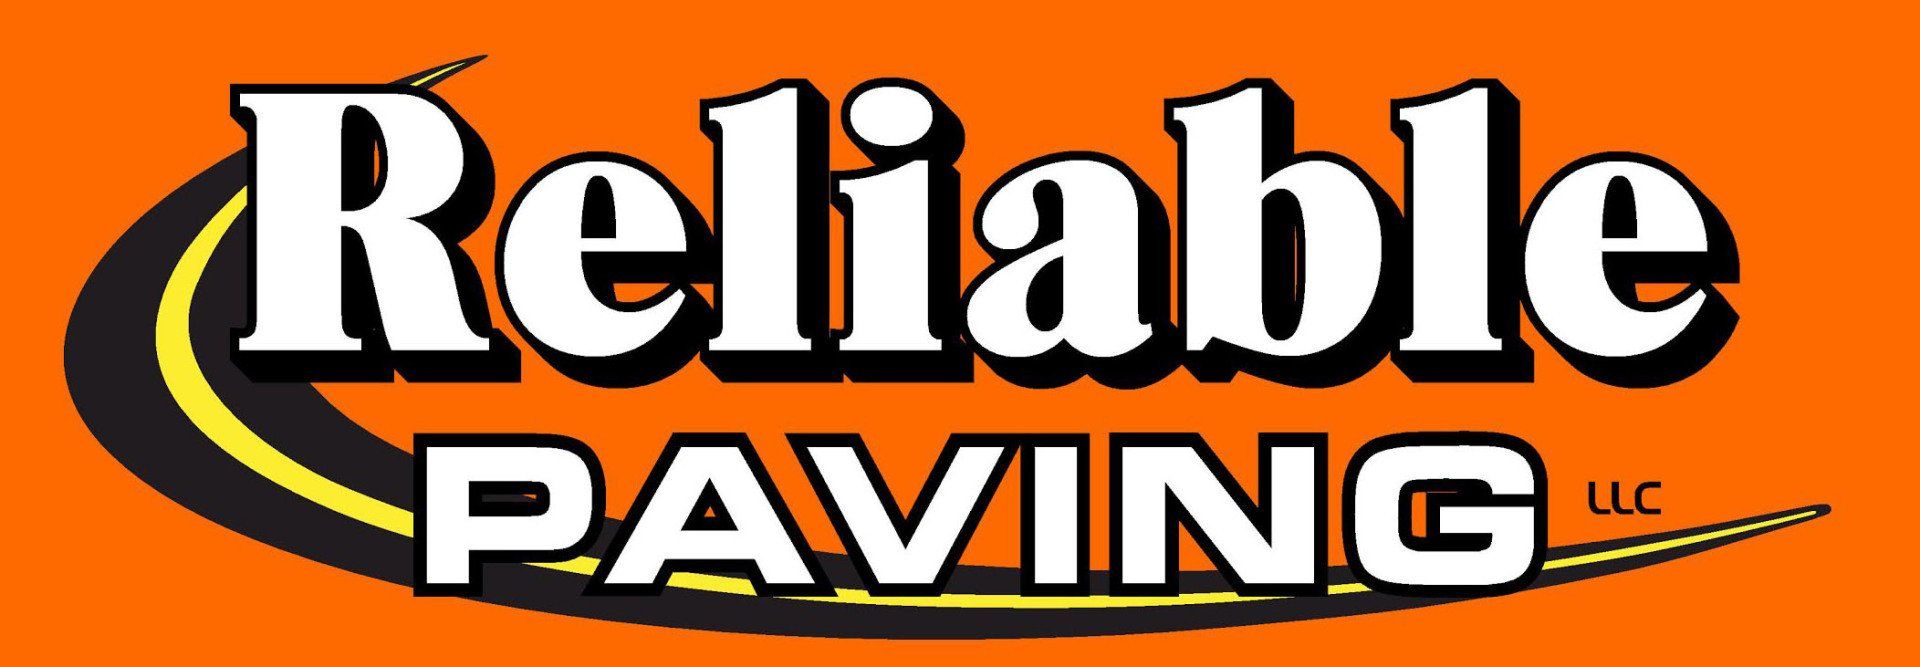 Reliable Paving LLC logo